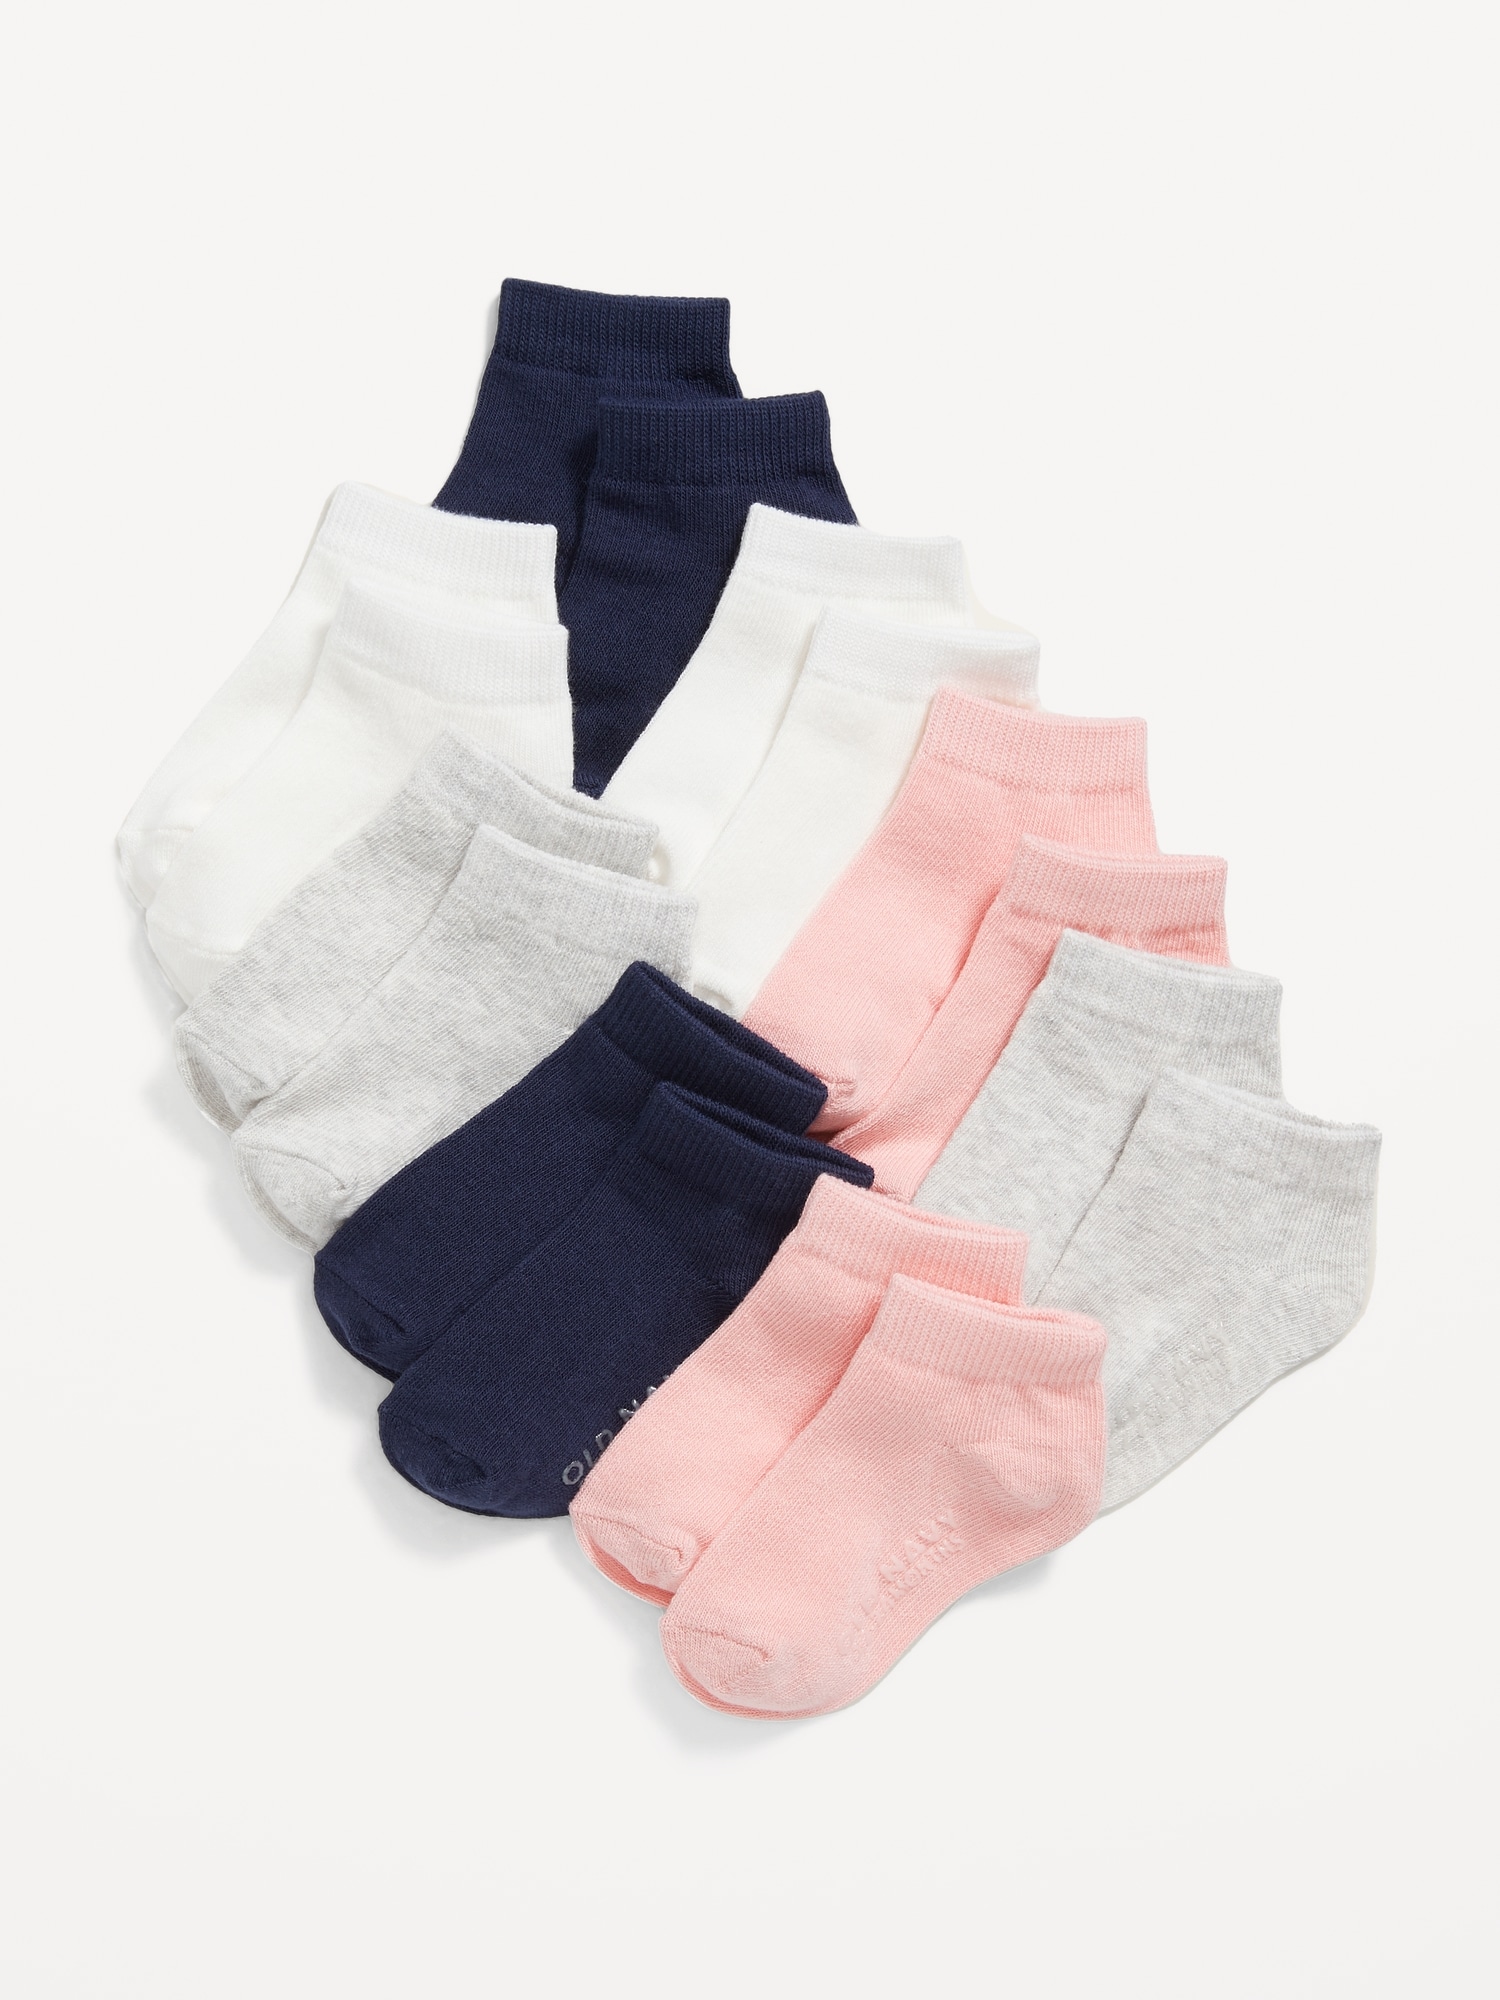 Unisex Ankle Socks 8-Pack For Toddler & Baby | Old Navy